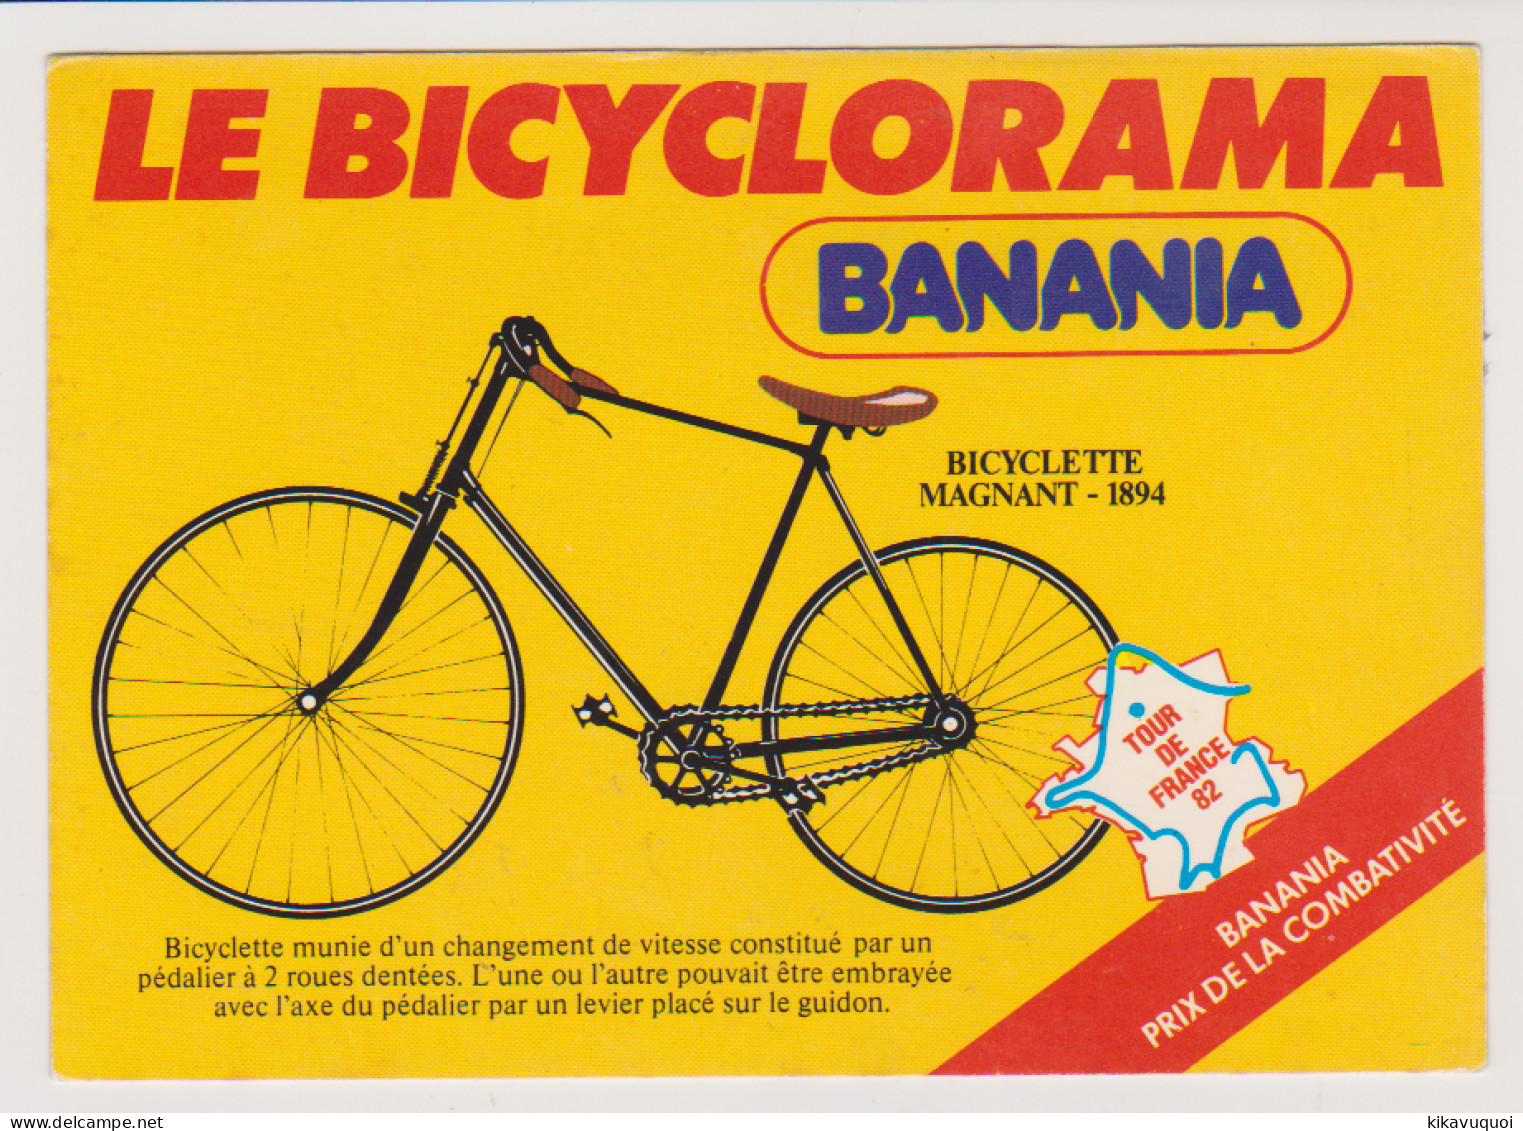 BANANIA - TOUR DE FRANCE 1982 - LE BICYCLORAMA - VELO - CYCLE - CARTE POSTALE ANCIENNE - Motorbikes